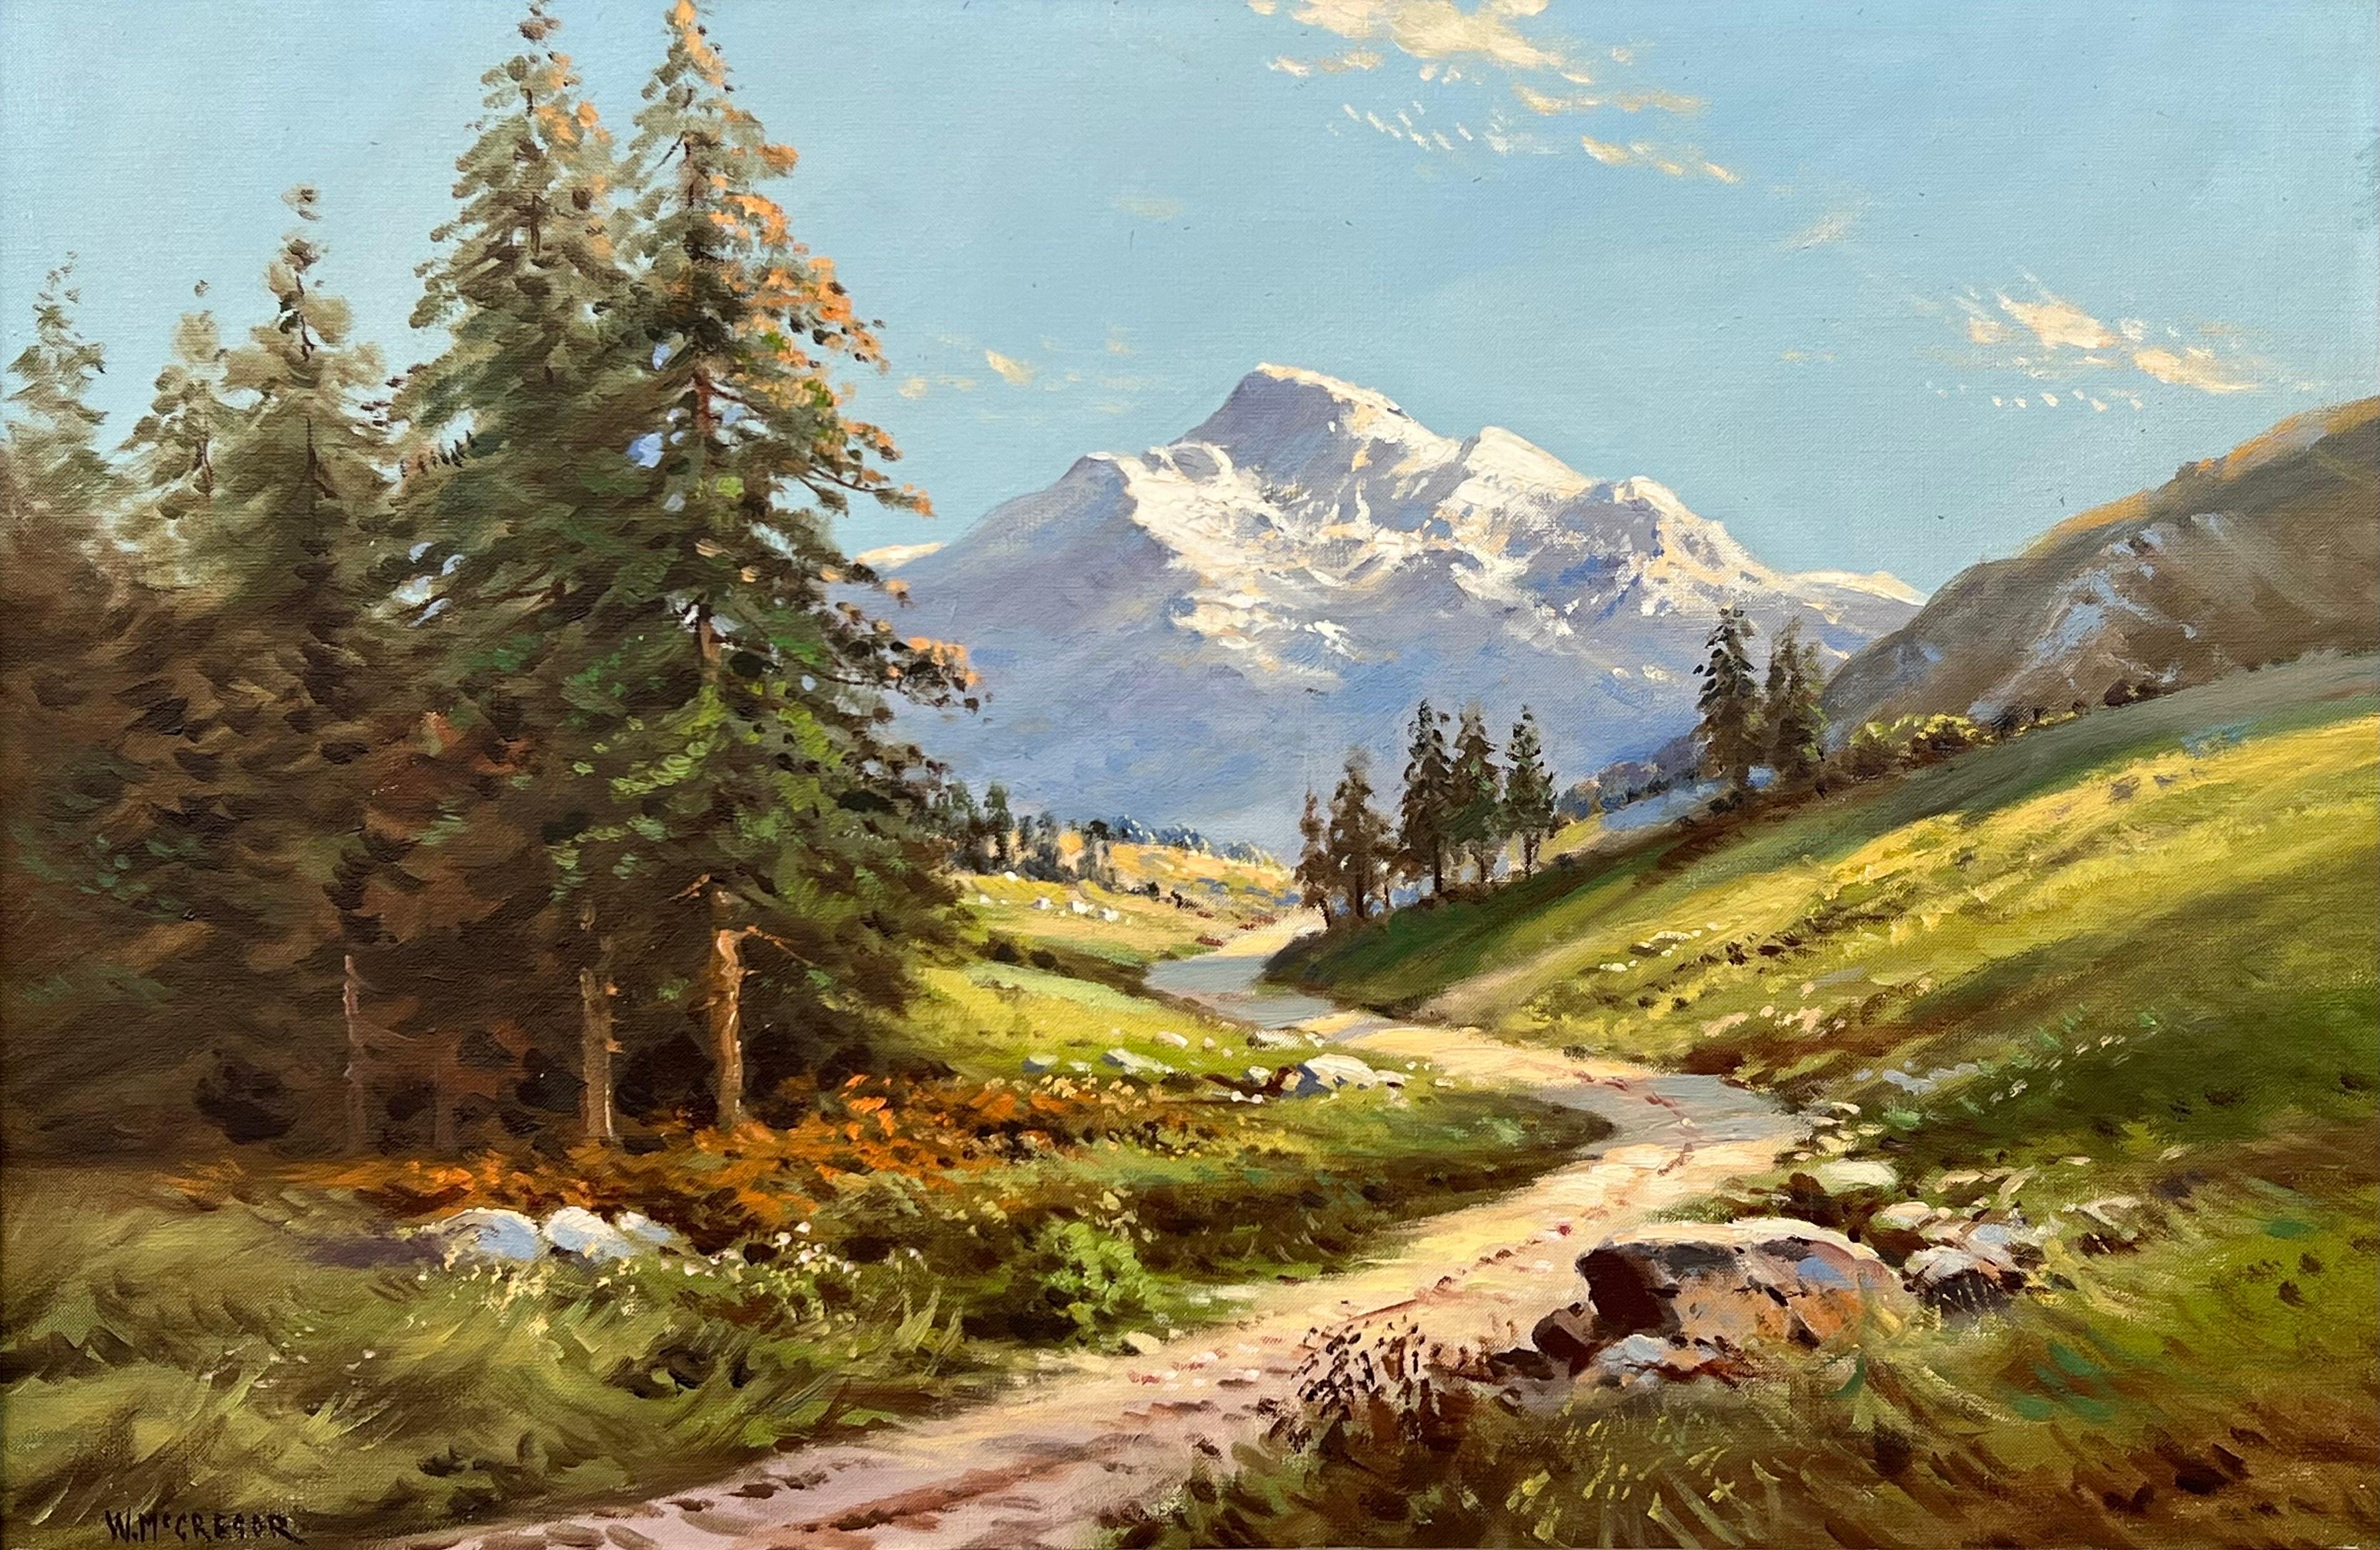 Ben Nevis from Glen Nevis Scottish Highlands Realist Landscape Oil Painting - Brown Landscape Painting by William McGregor